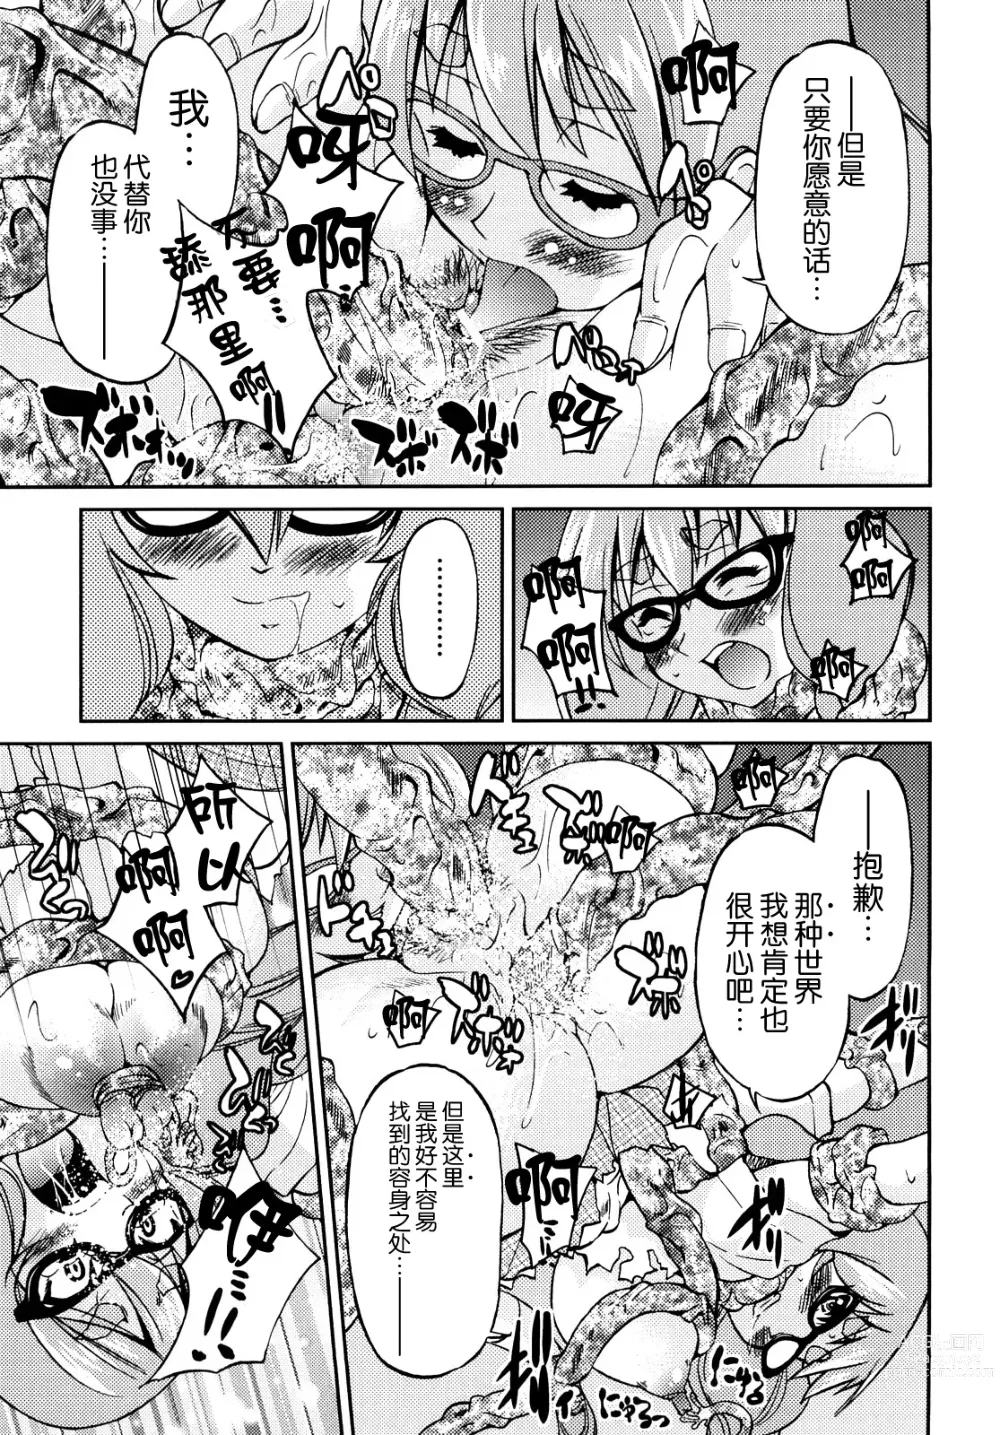 Page 214 of manga Shibarare Hime